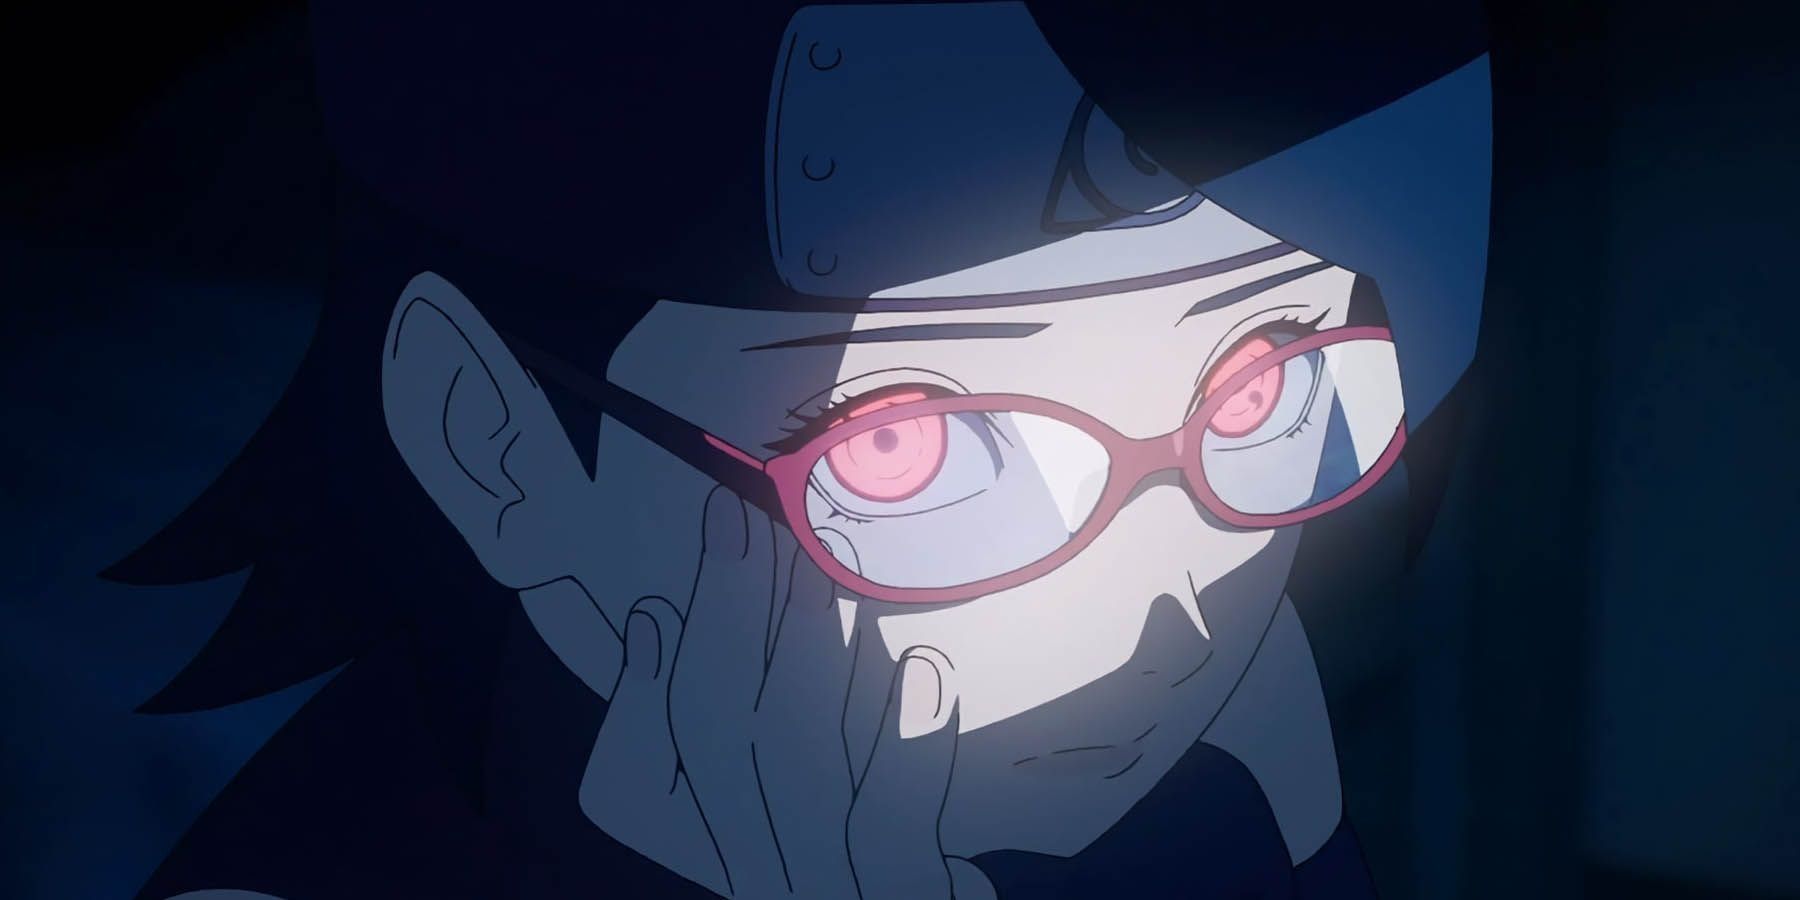 Sarada Uchiha as seen in the Boruto anime (Image via Studio Pierrot)